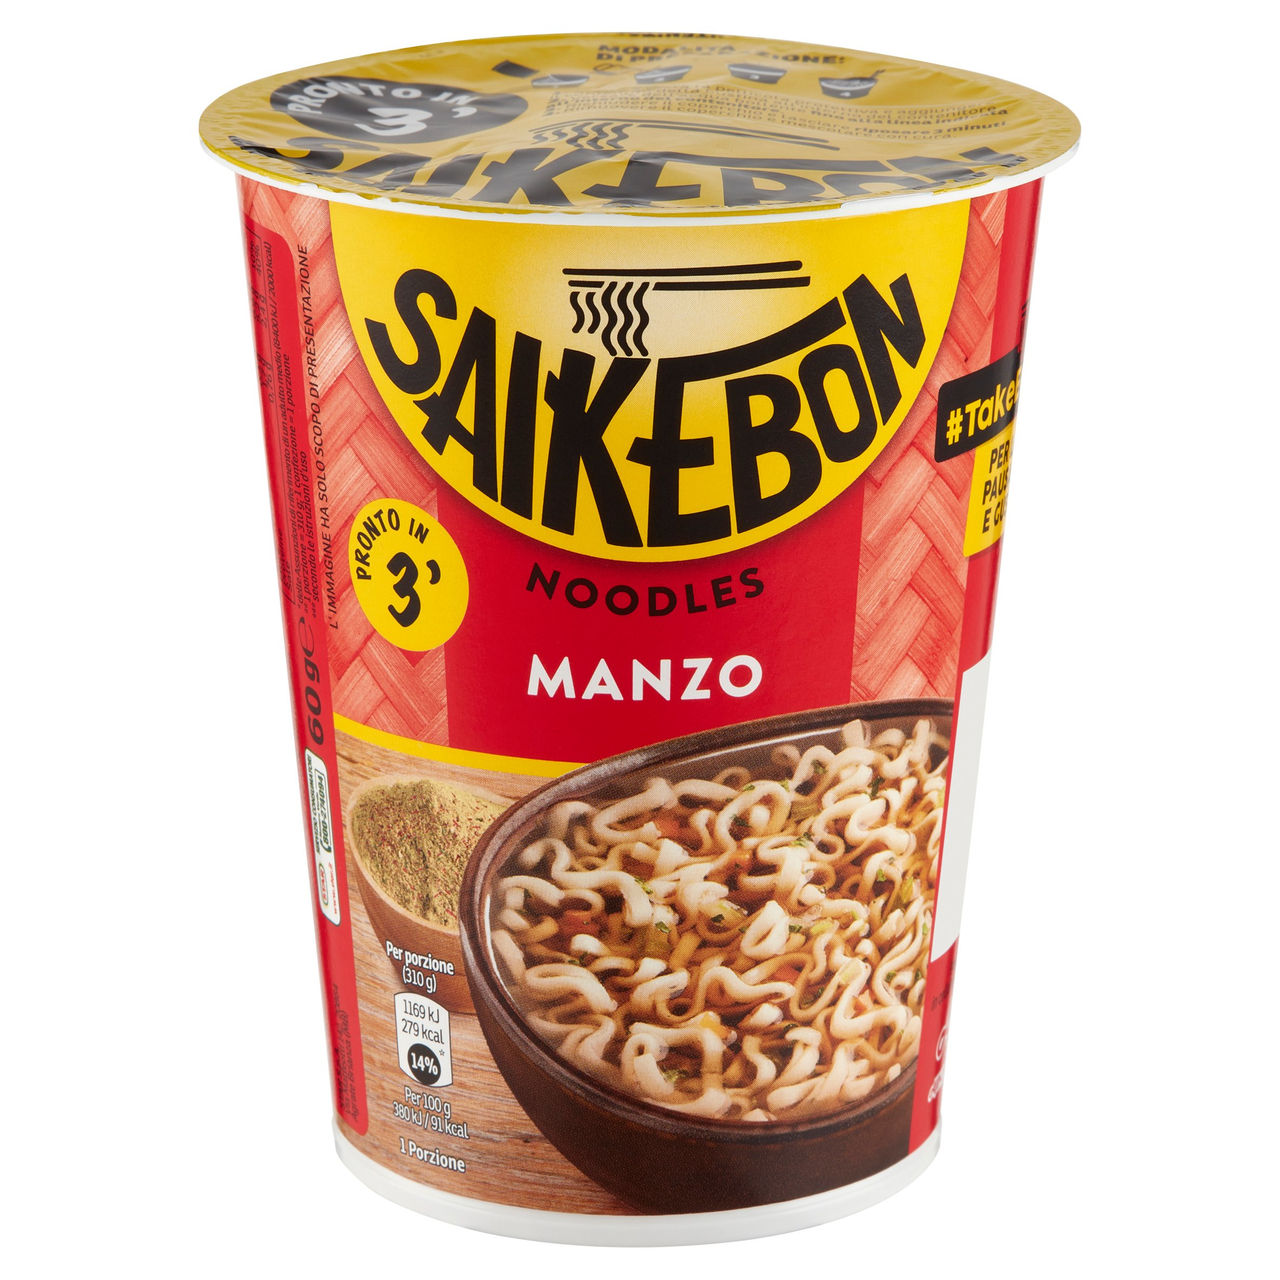 Star Saikebon Noodles al Manzo in vendita online